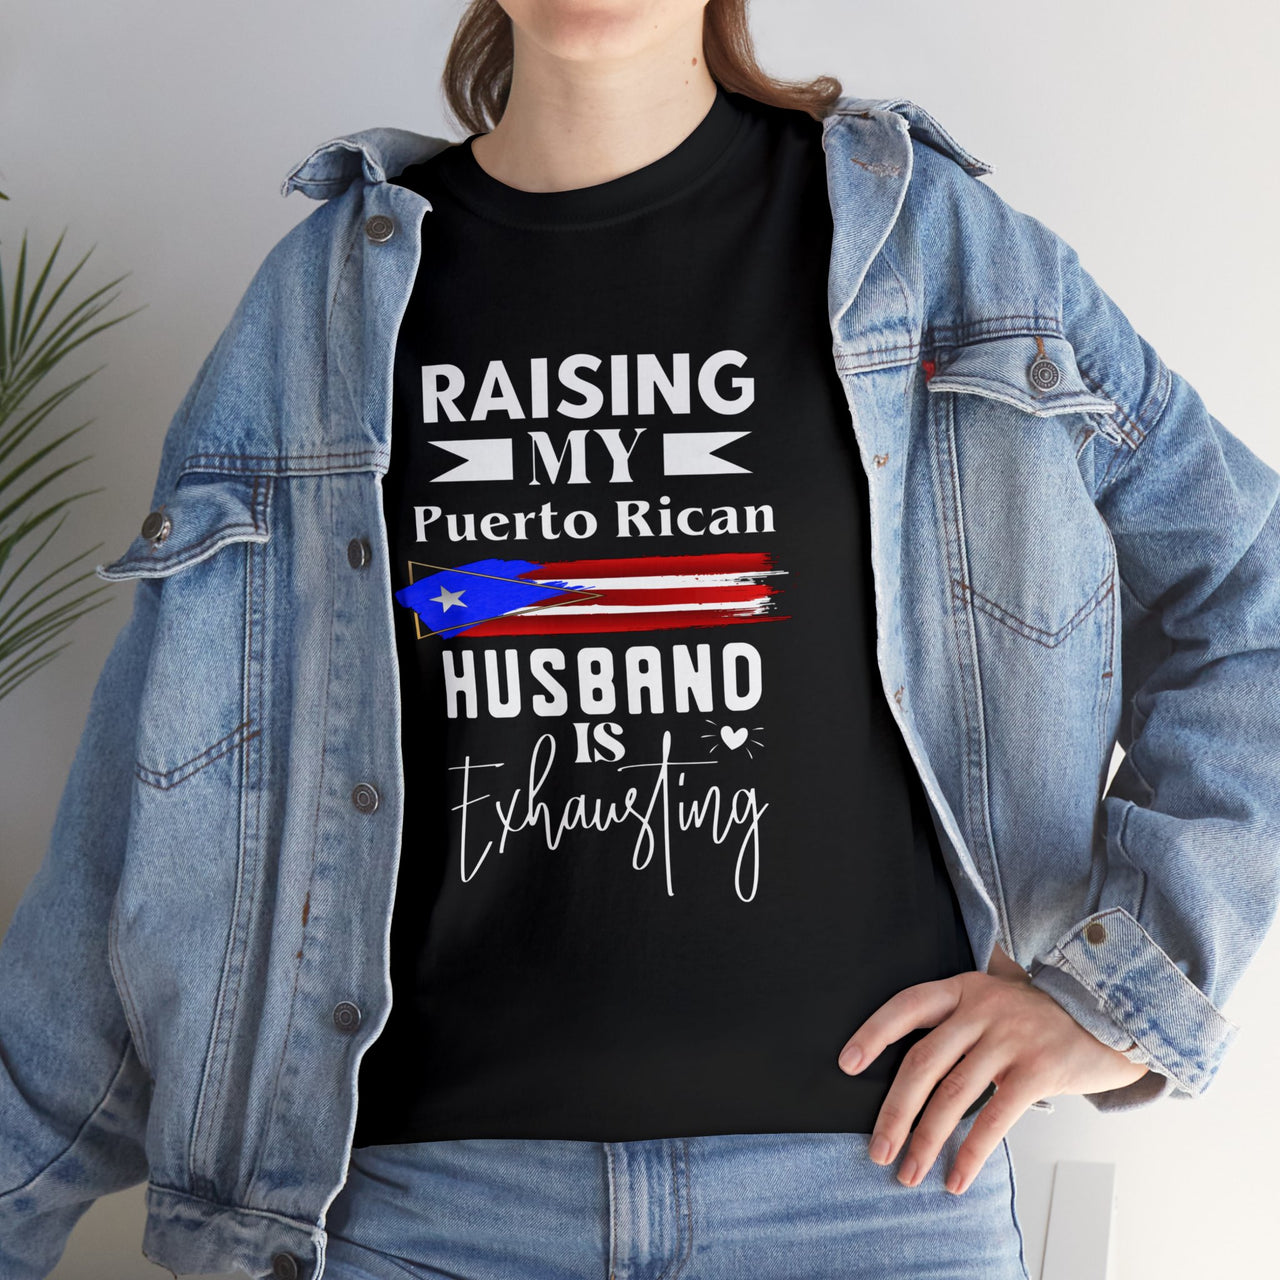 Raising My Puerto Rican Husband Is Exhausting - Heavy Cotton Tee